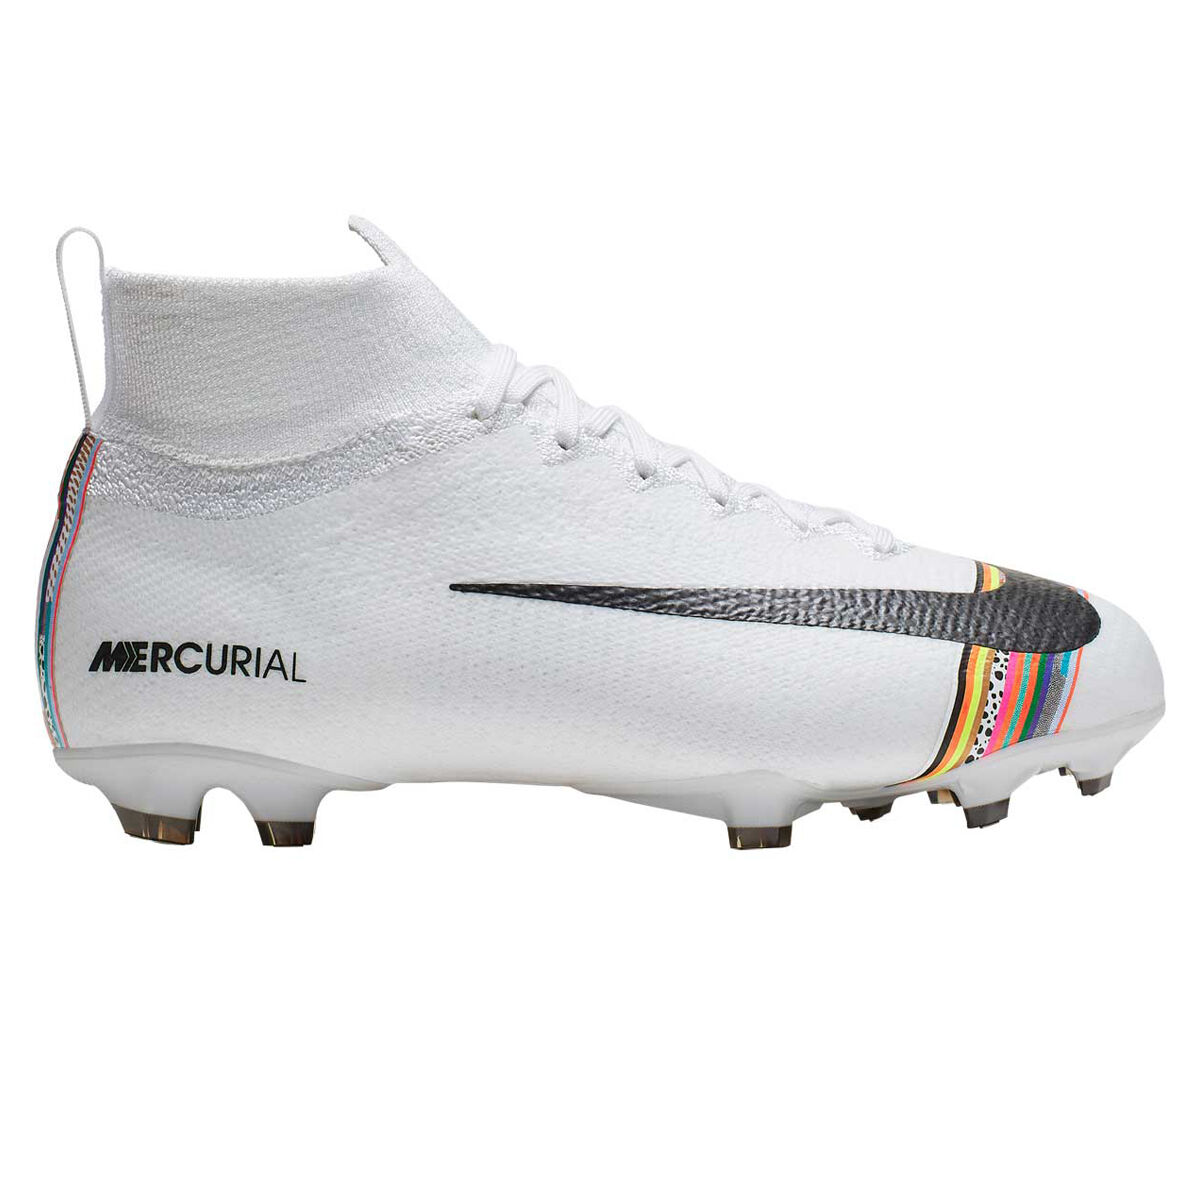 Nike Mercurial Superfly 6 Amazon.com